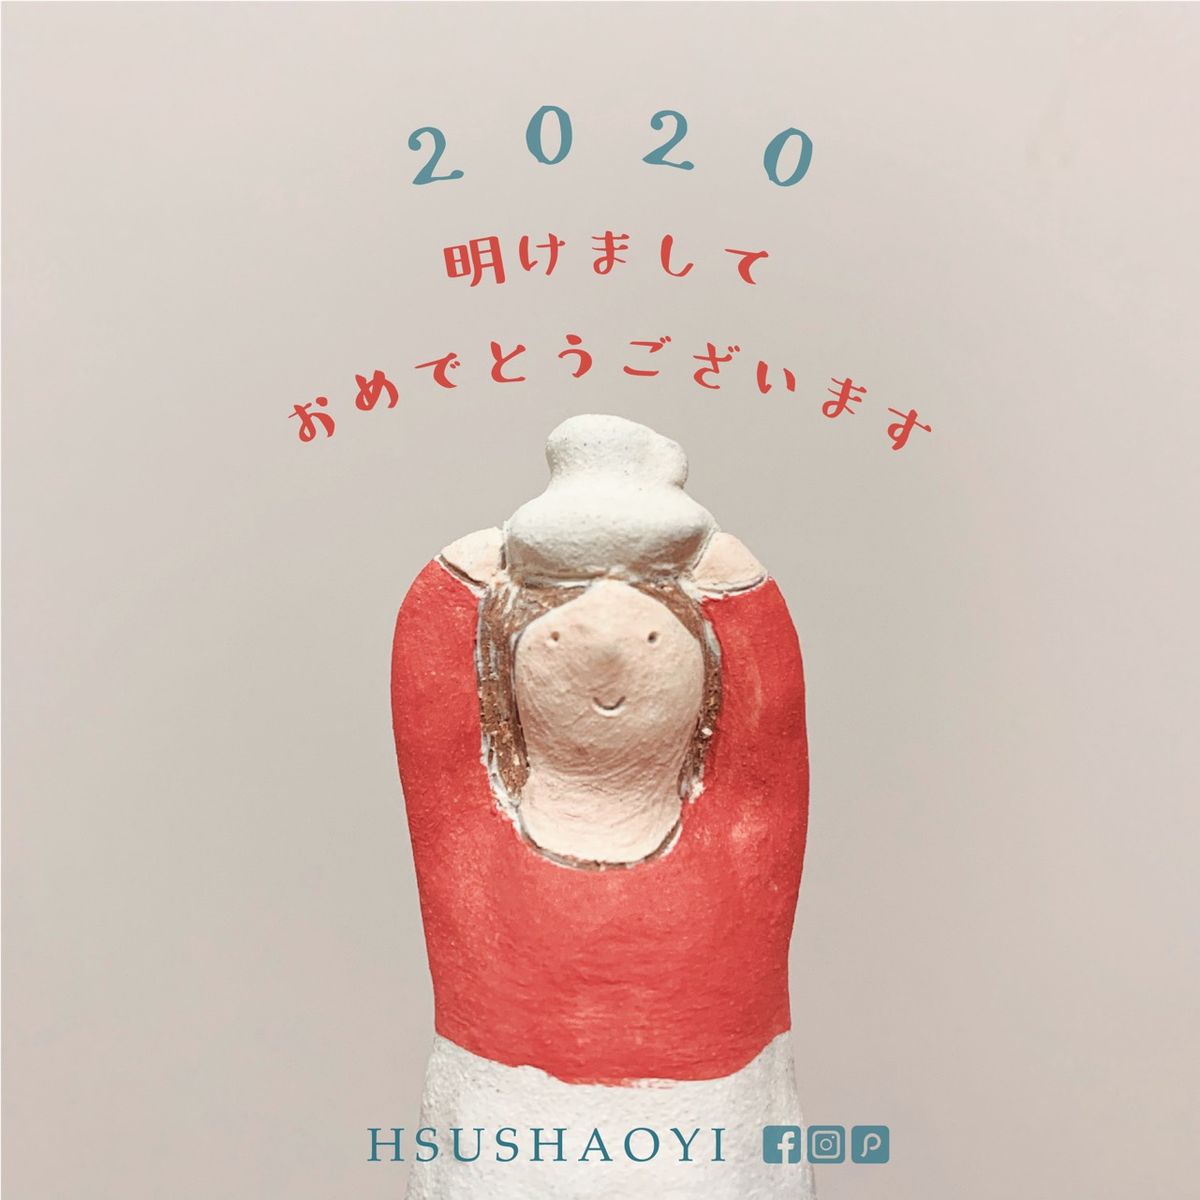 2020 happy new year（2020-01-01 Written by HSUSHAOYI）